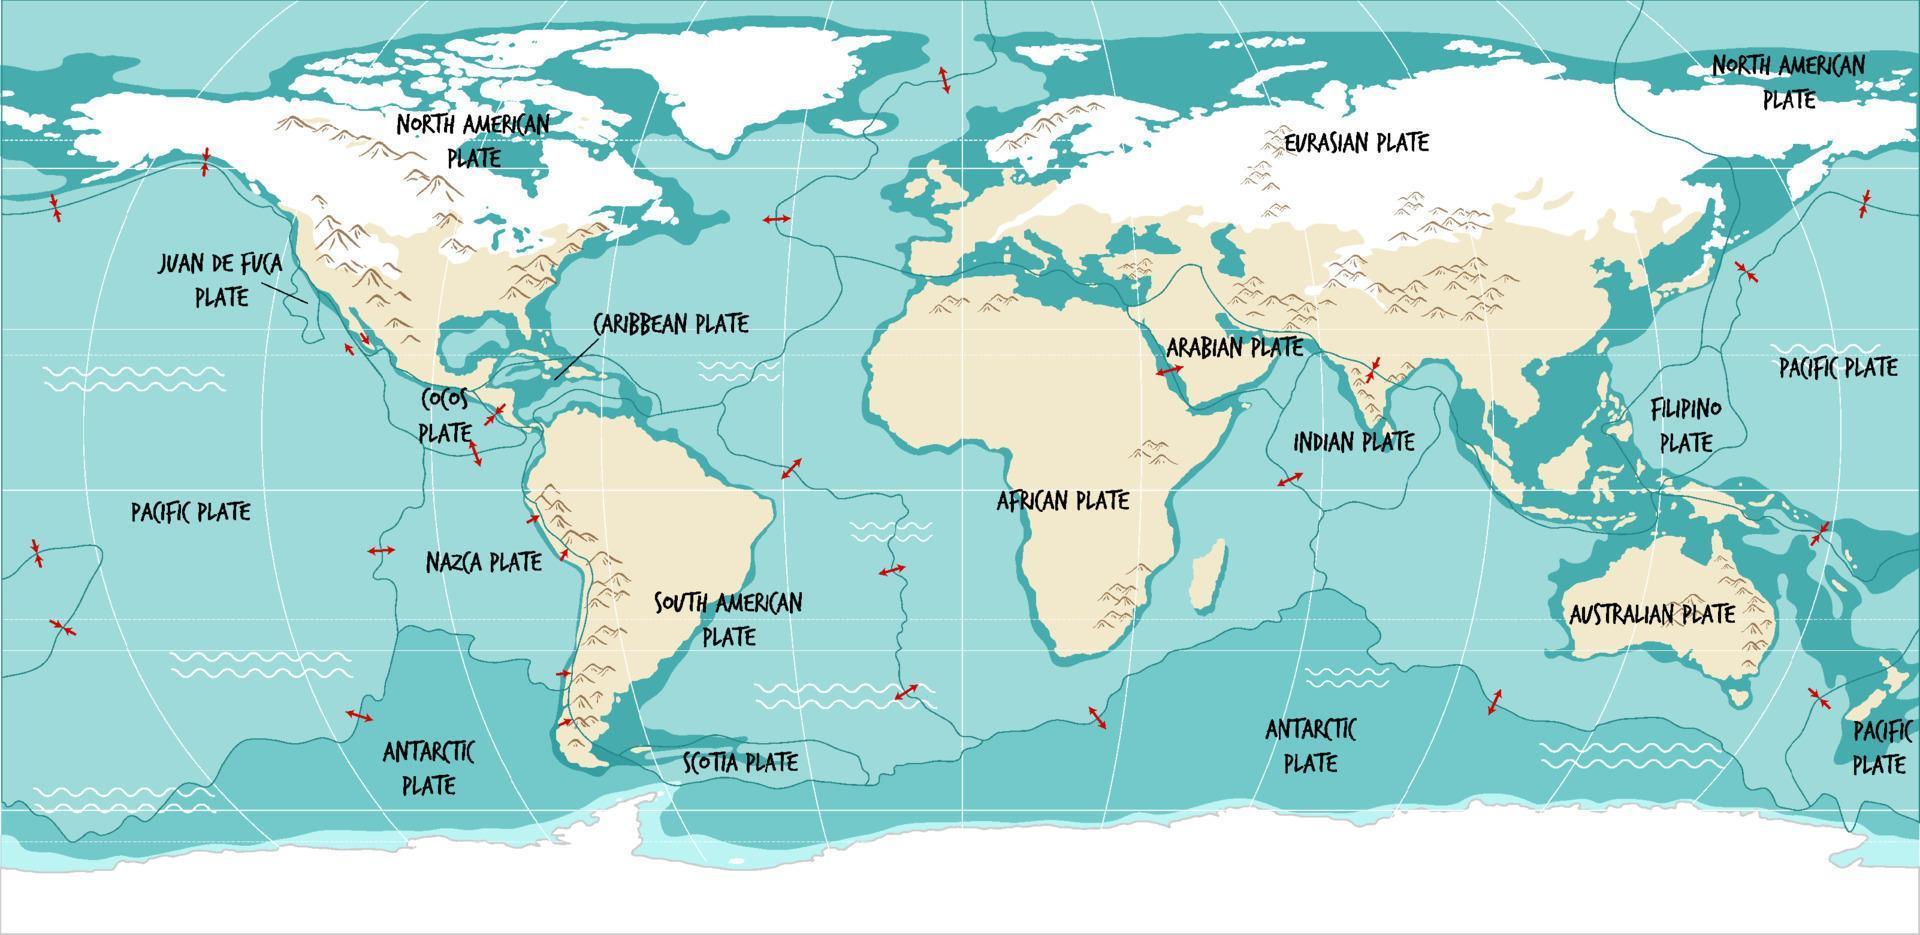 World Map Showing Tectonic Plates Boundaries vector